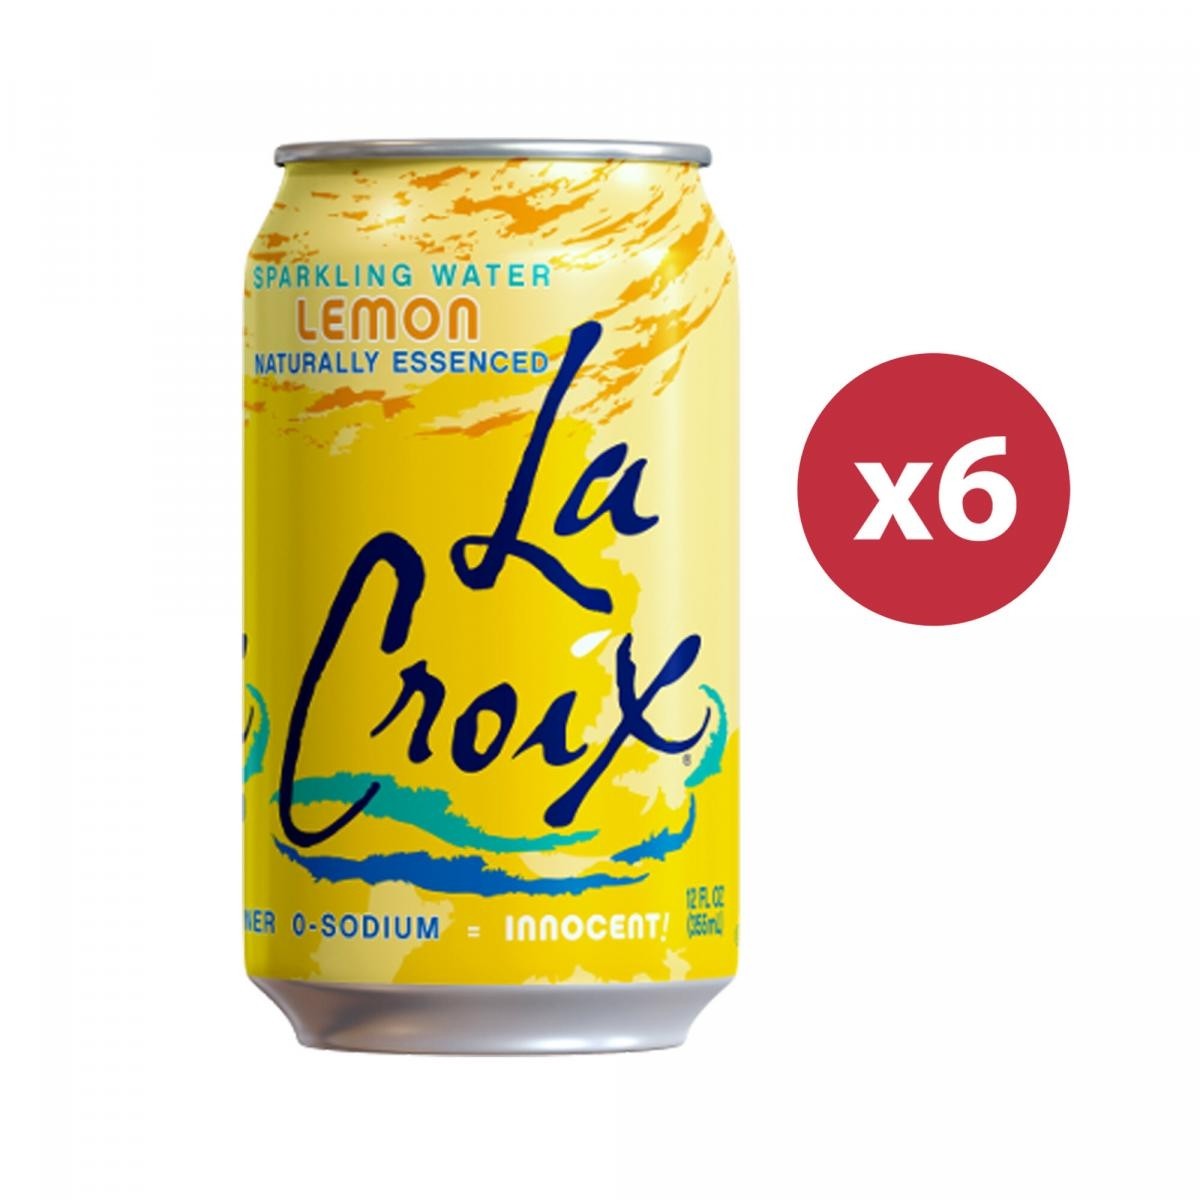  LACROIX - 檸檬天然精華蘇打水 (六罐裝) Lemon Naturally Essenced Sparkling Water (6 cans)